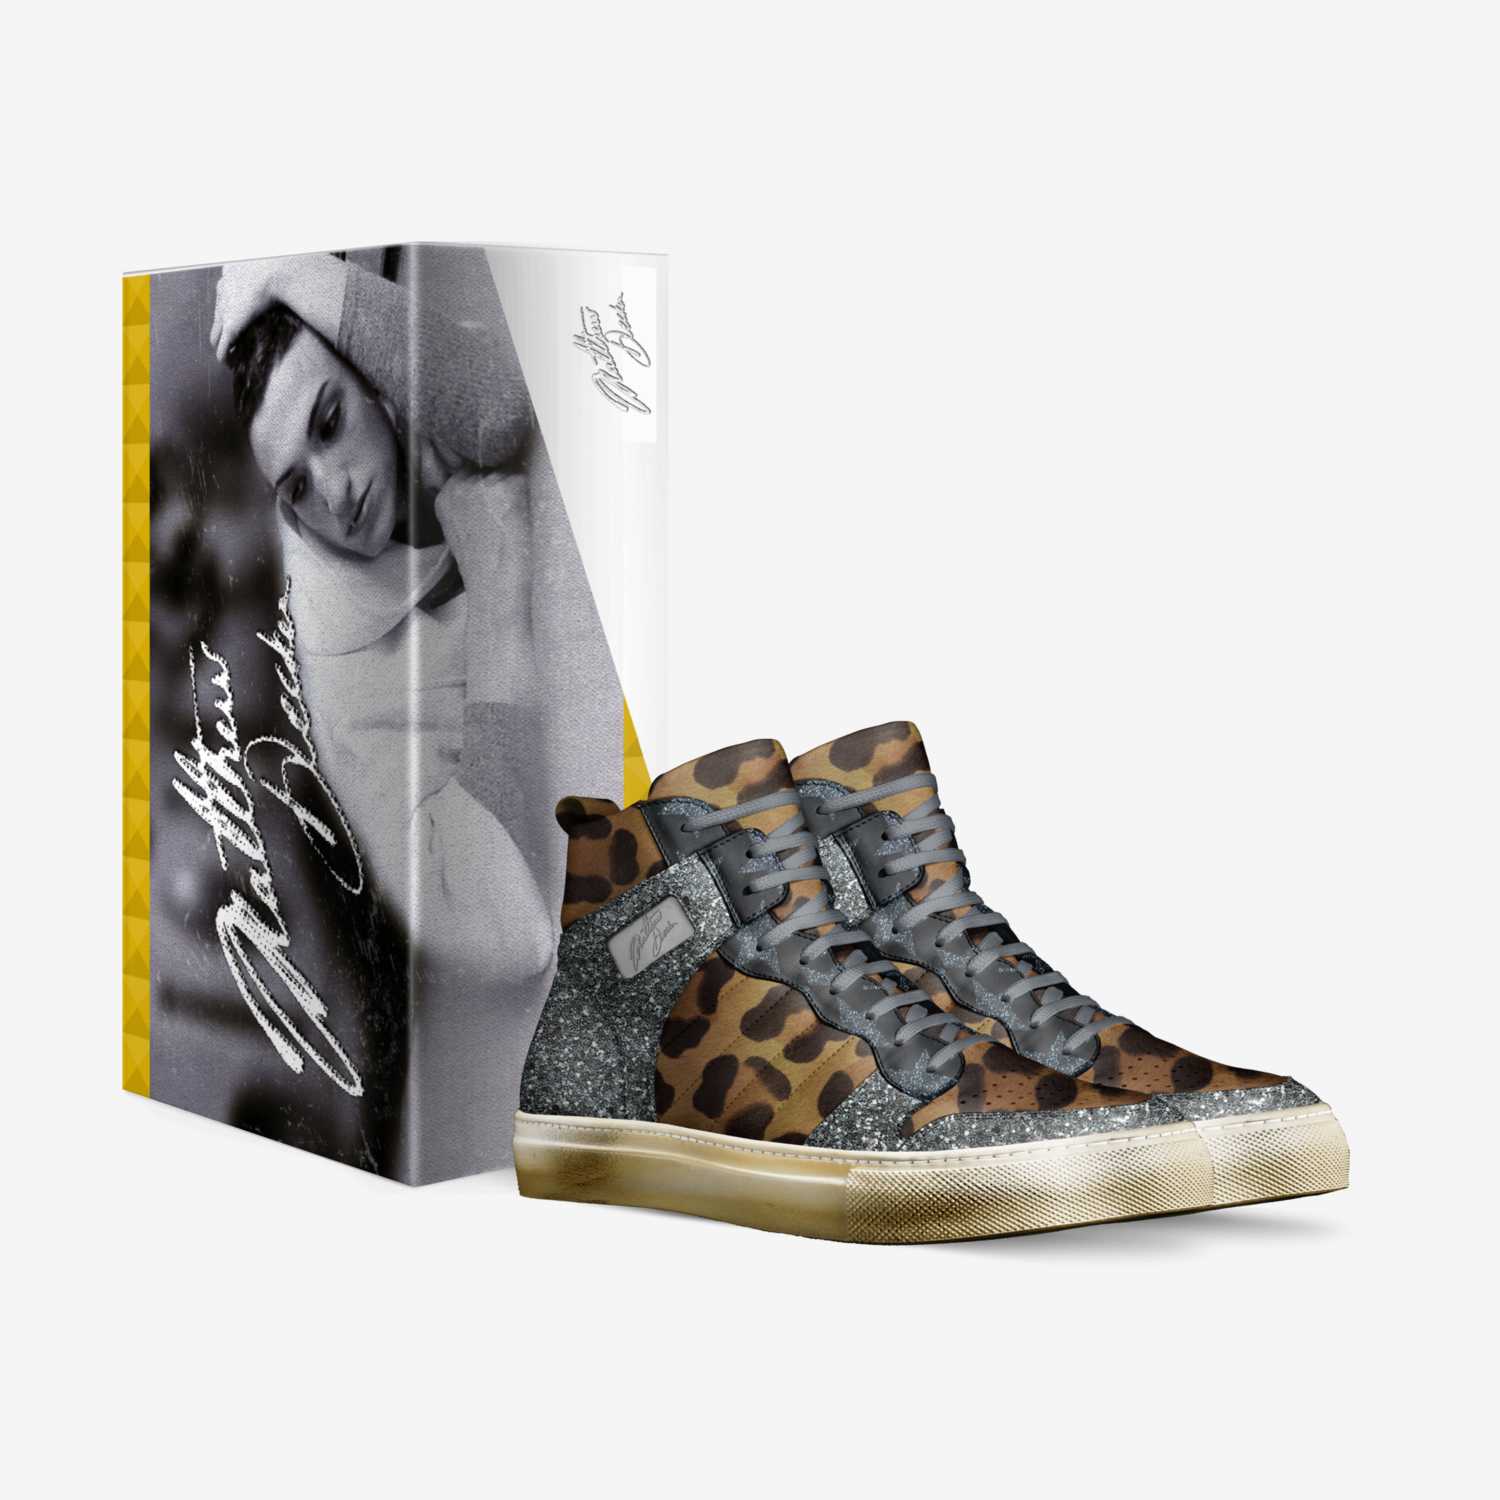 Matthew Decker  custom made in Italy shoes by Matthew Decker | Box view